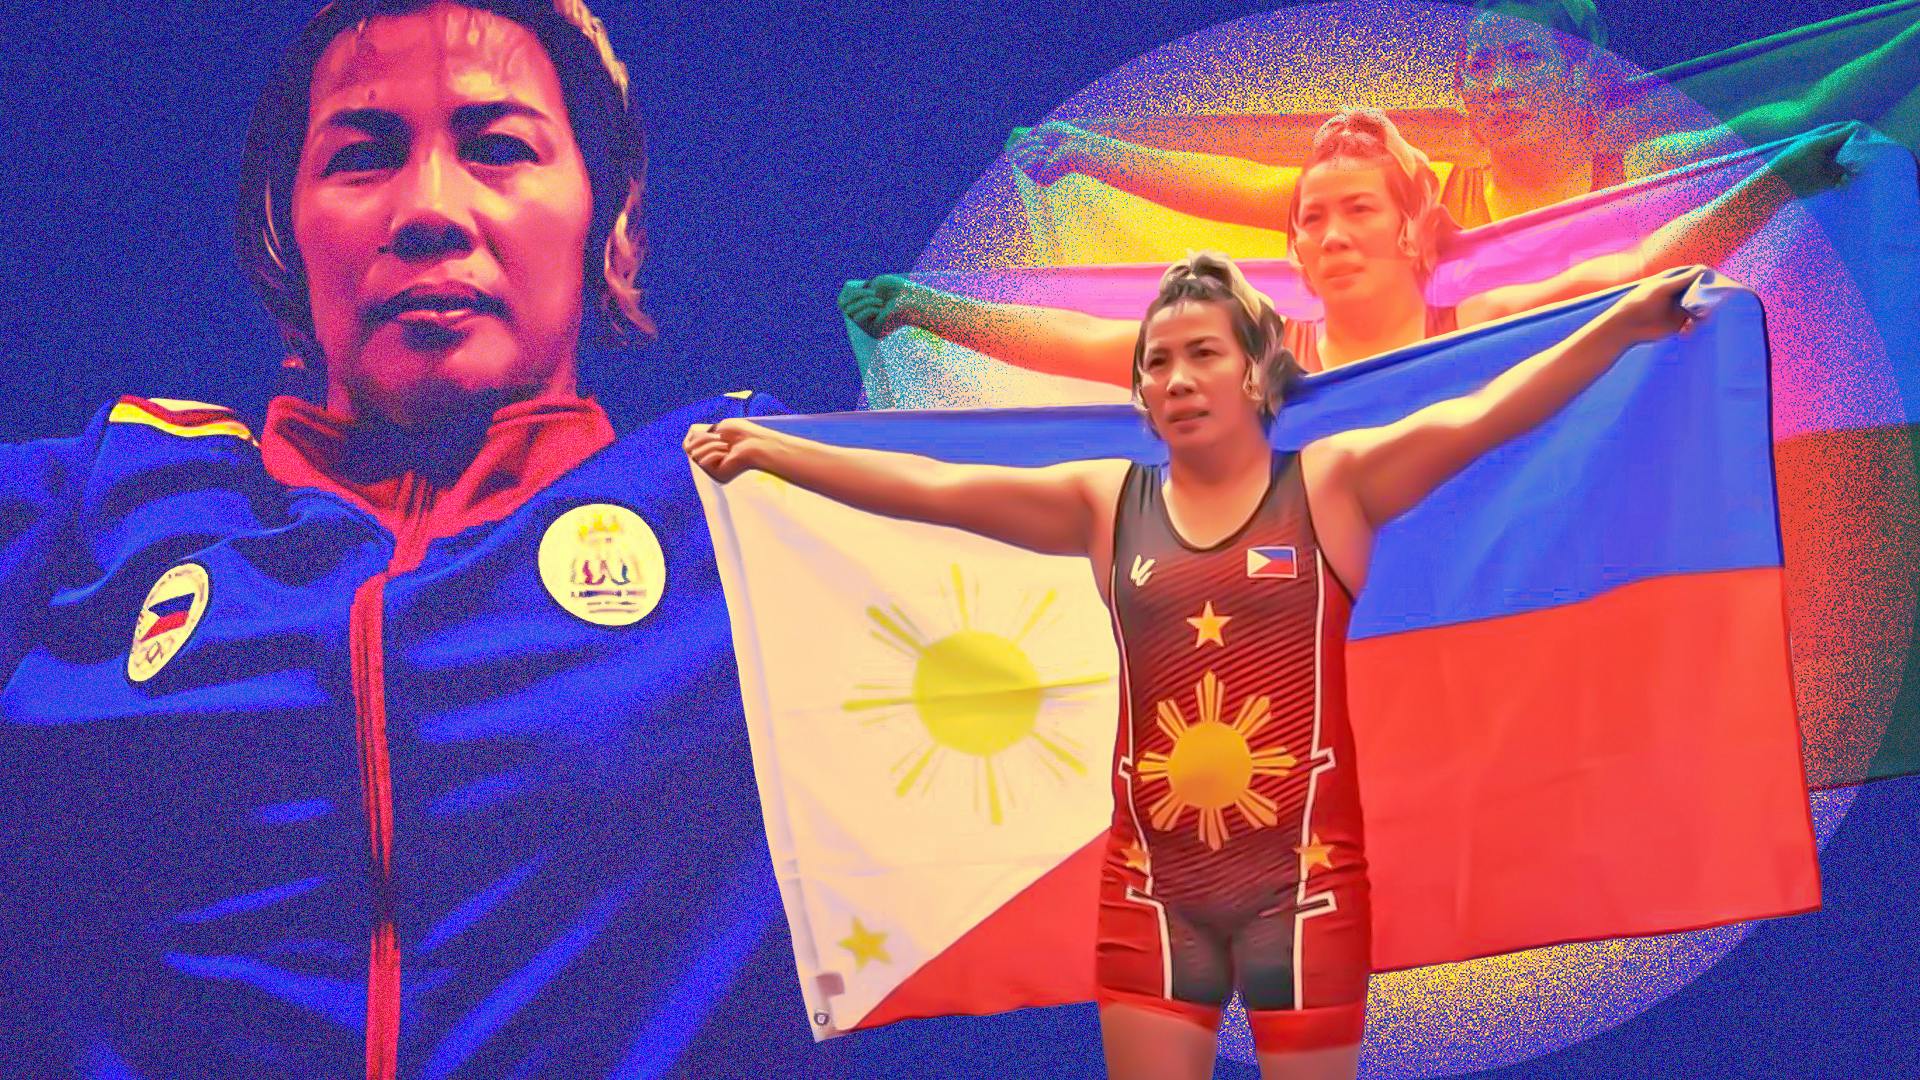 Wrestler. Mother. Champion: SEA Games gold medalist Cristina Villanueva Vergara is a superwoman